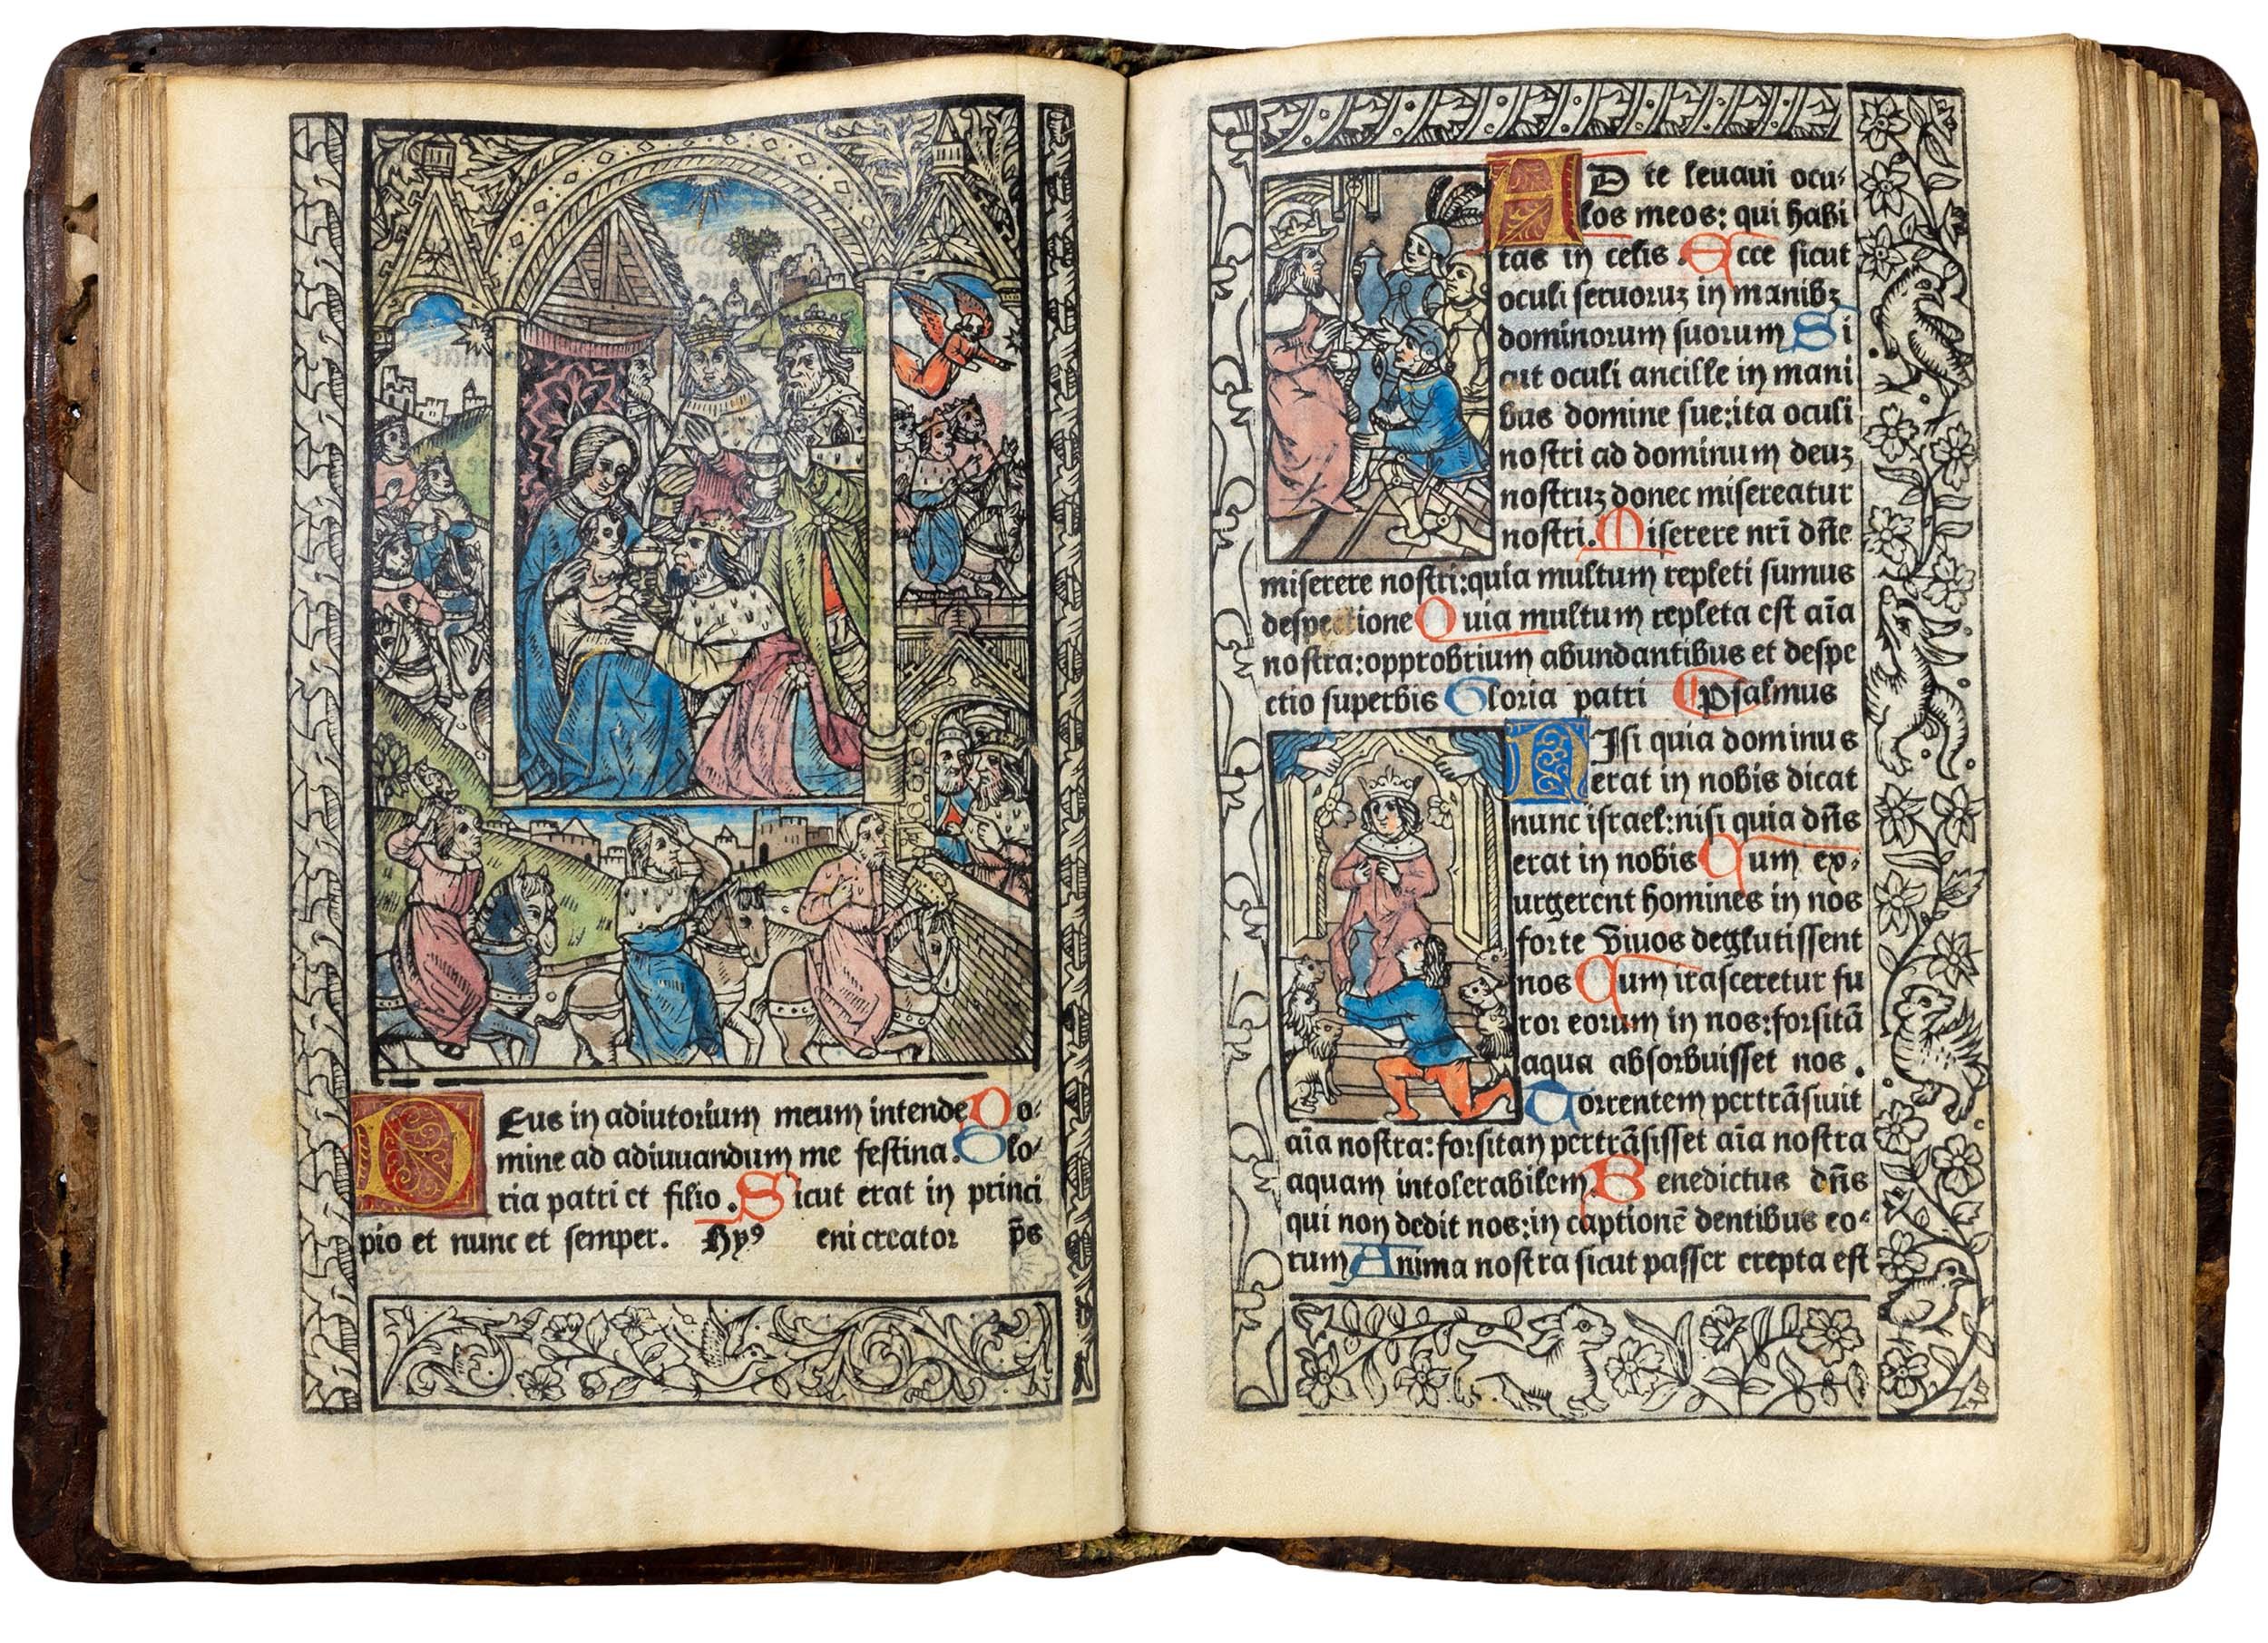 Printed-book-of-hours-chalon-sur-saone-dupre-1488-illuminated-vellum-horae-bmv-38.jpg